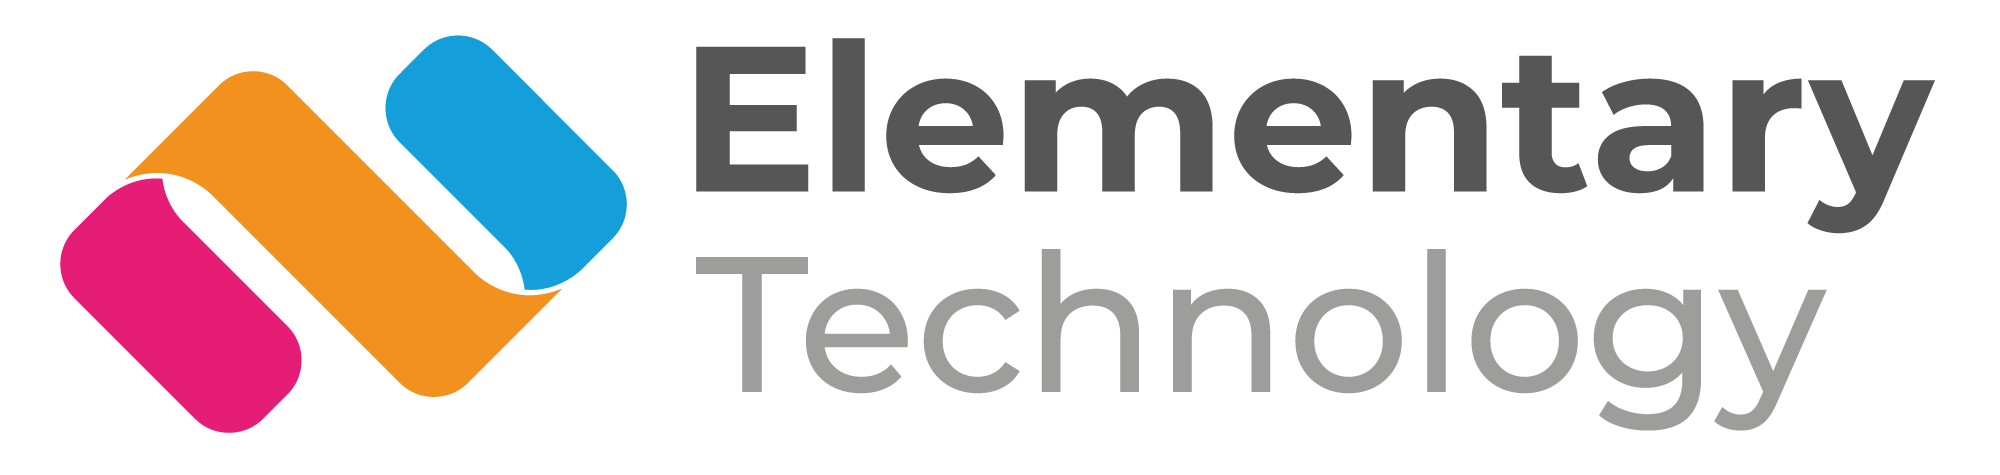 Elementary Technology logo